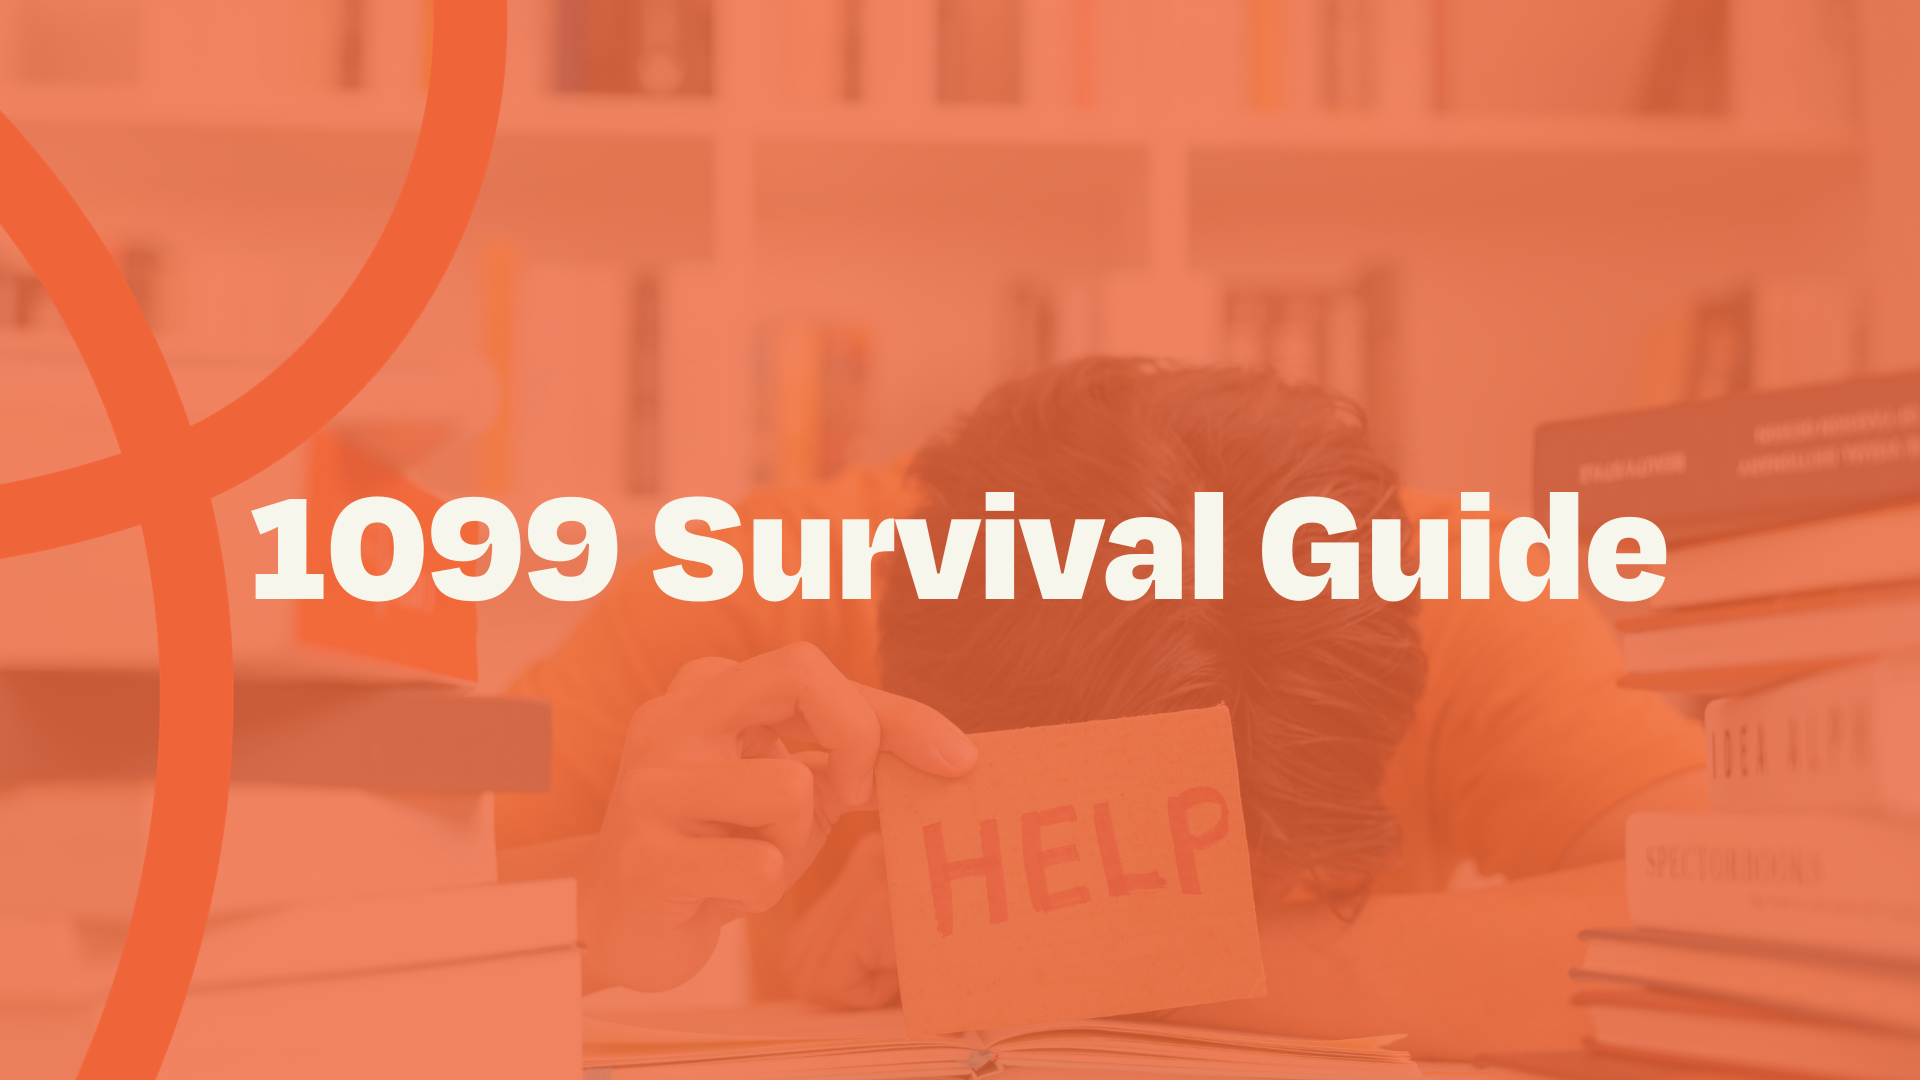 The 1099 Survival Guide: Navigating Tax Season